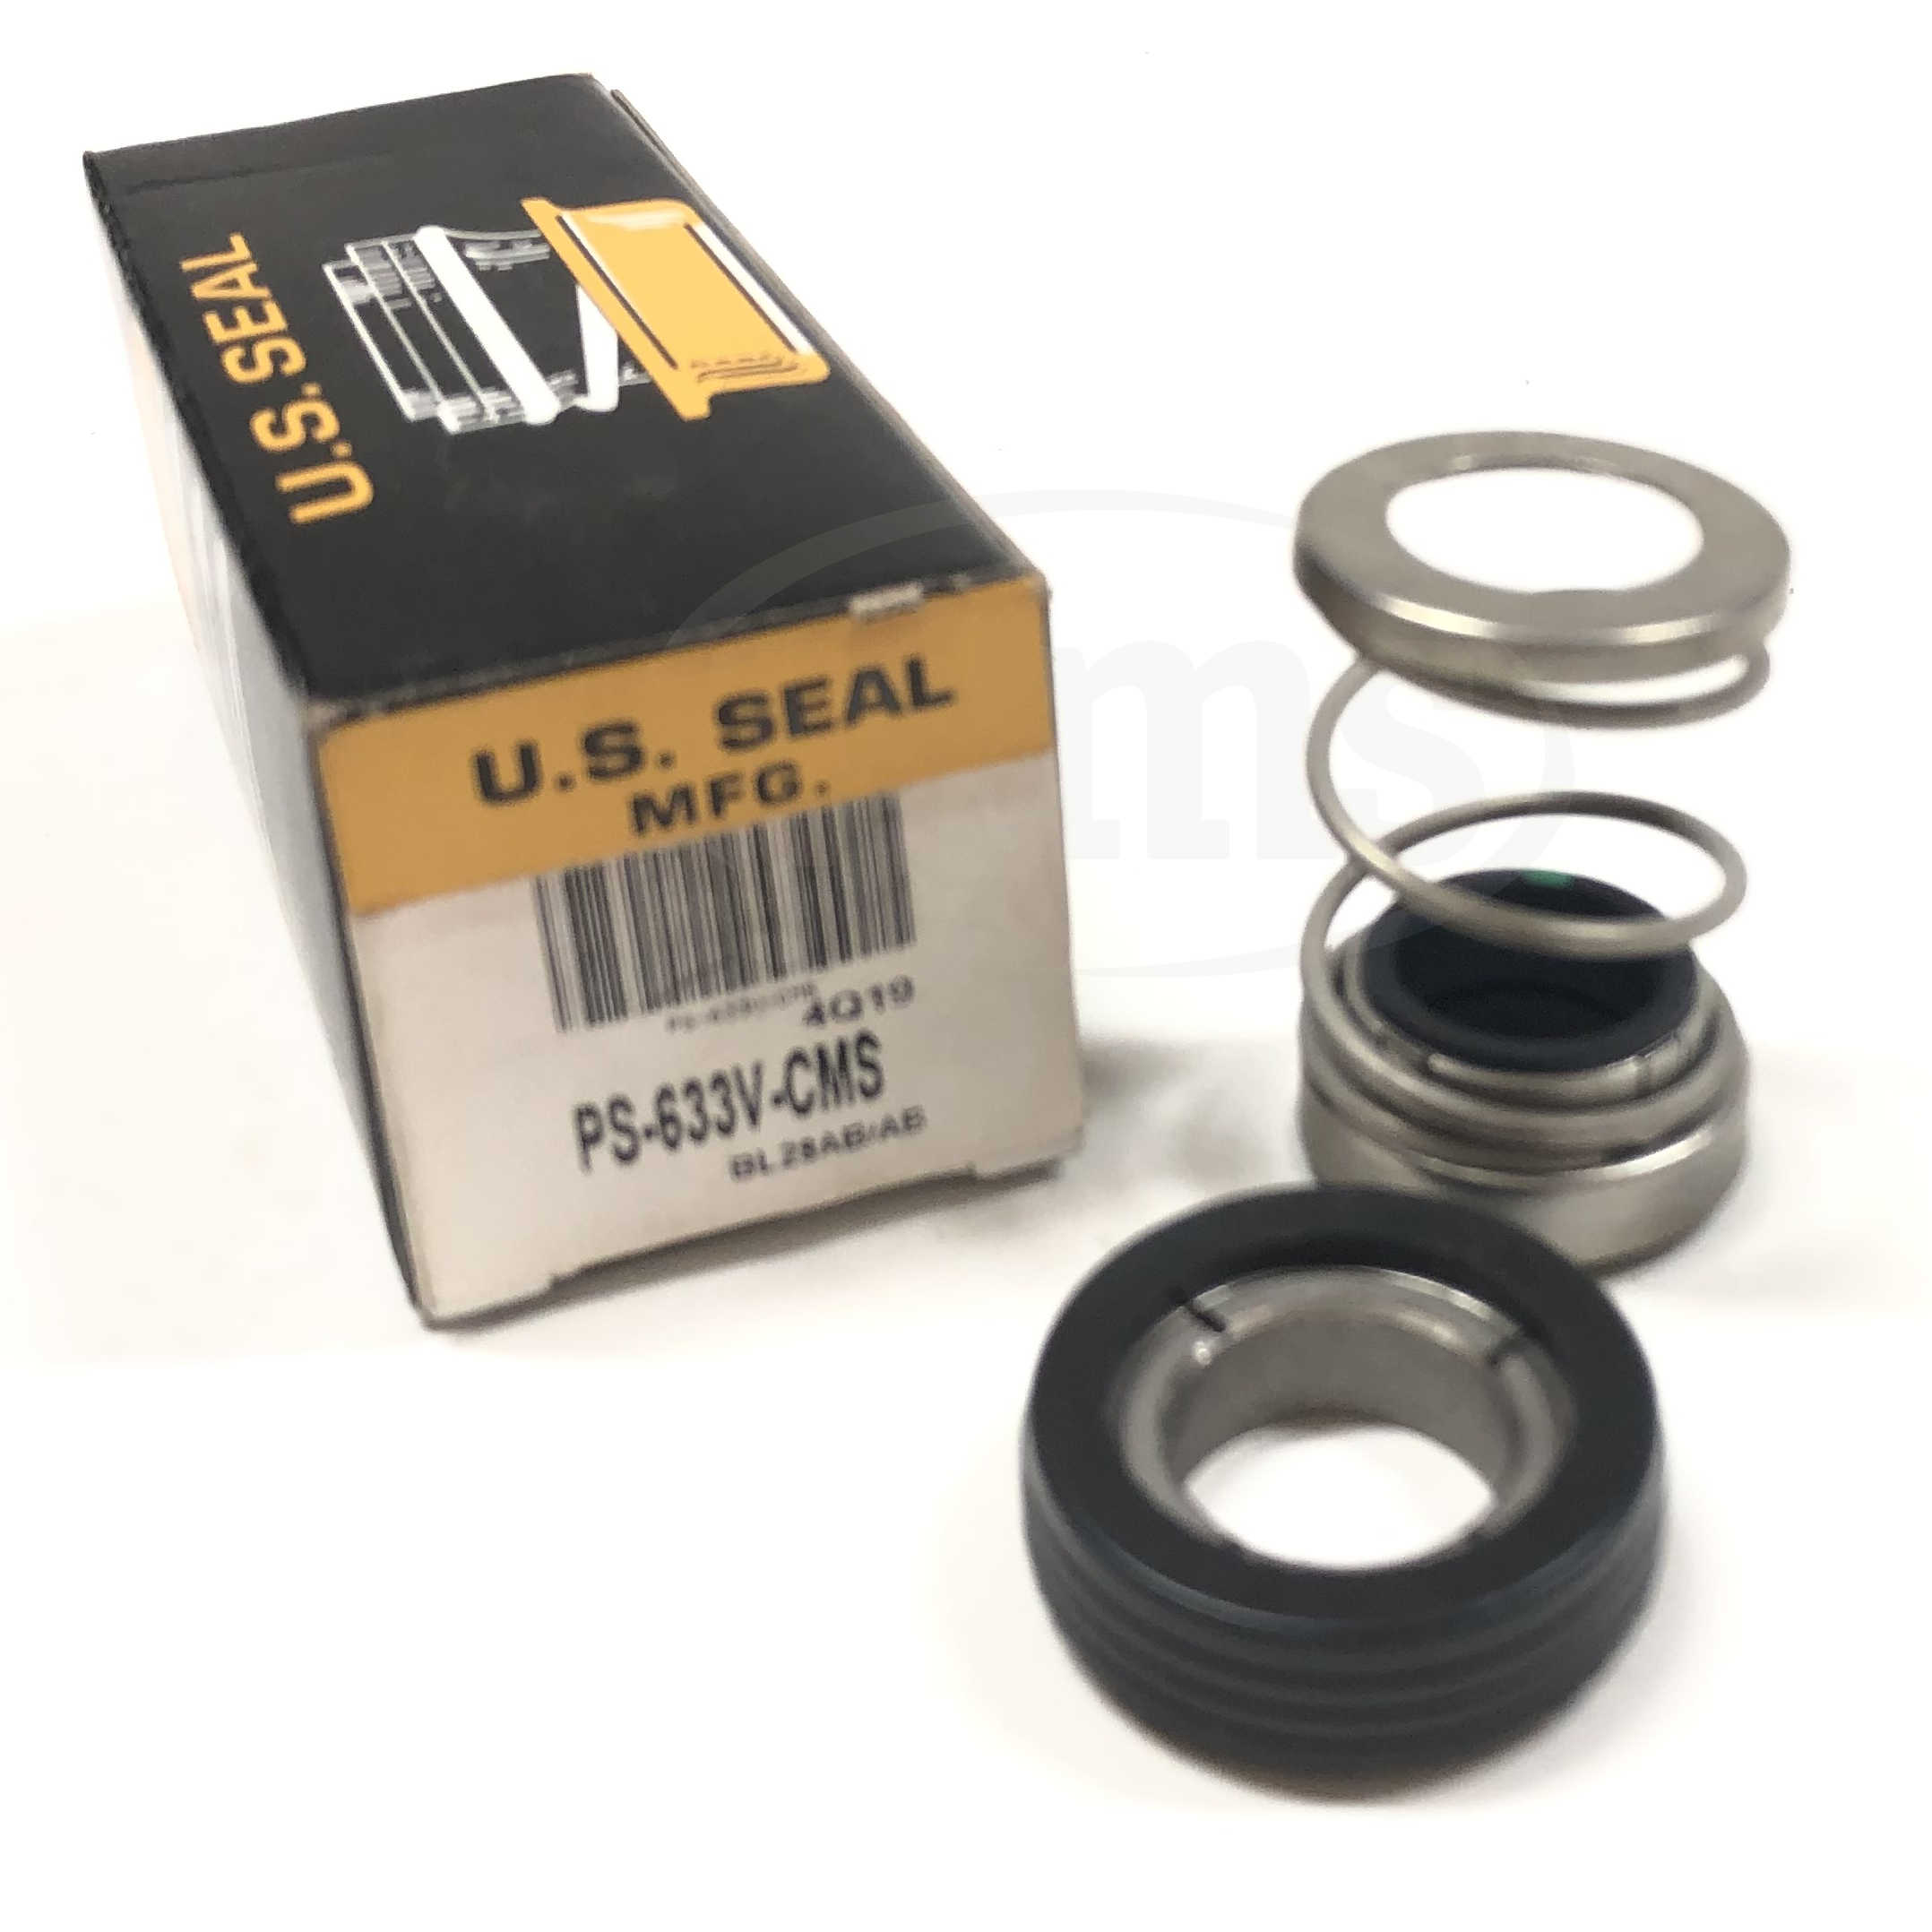 PS-633V-CMS U.S Seal MFG. Pump Seal 1